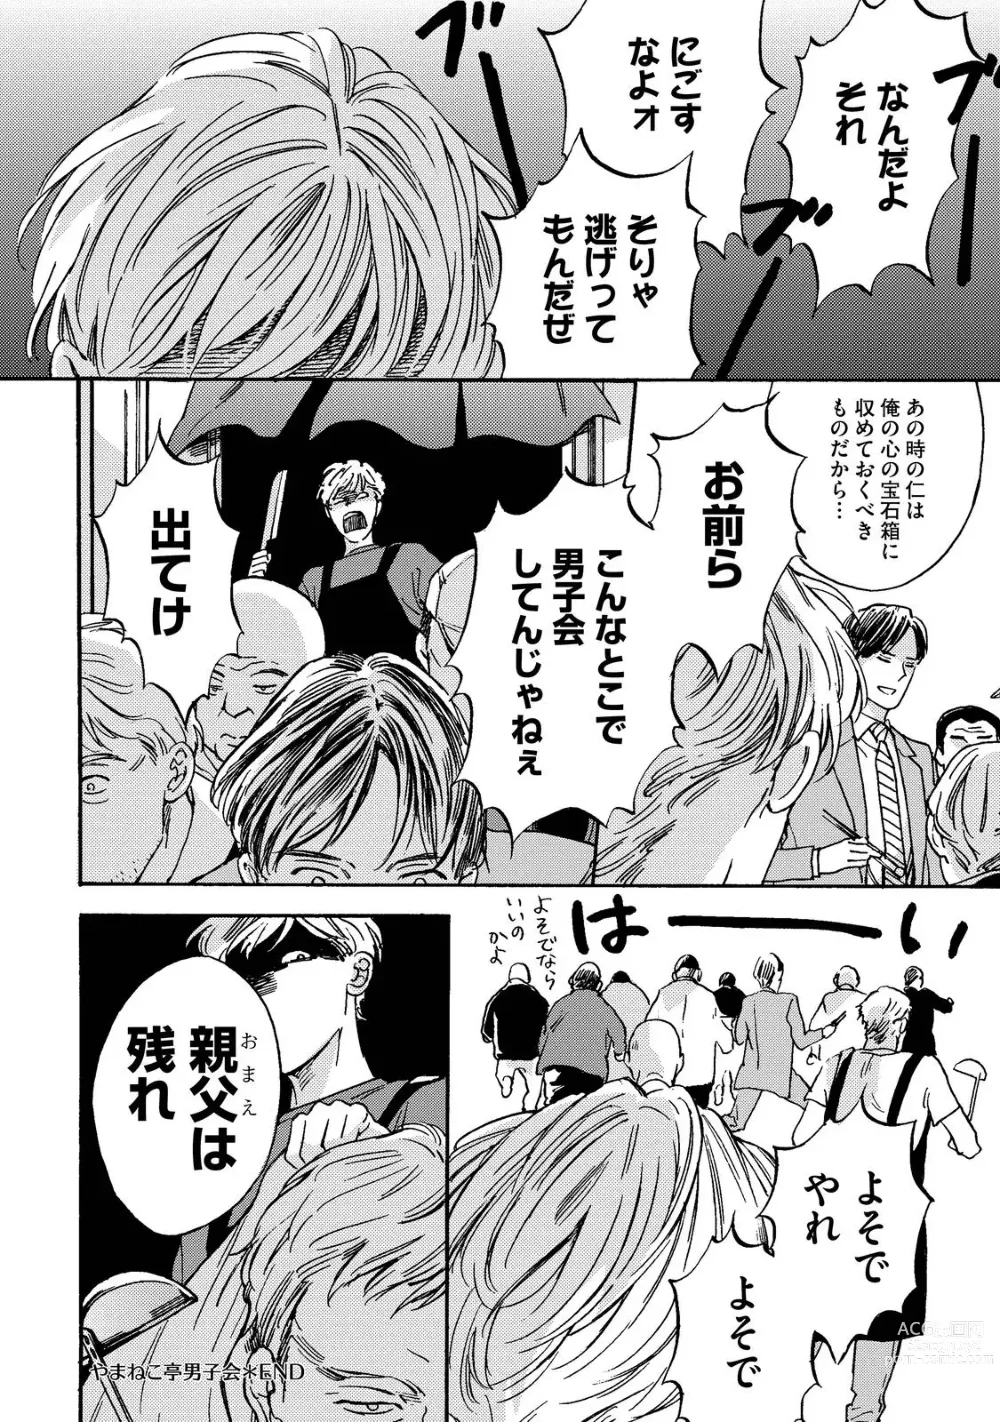 Page 173 of manga Koi Tokidoki, Yaki Saba Teishoku